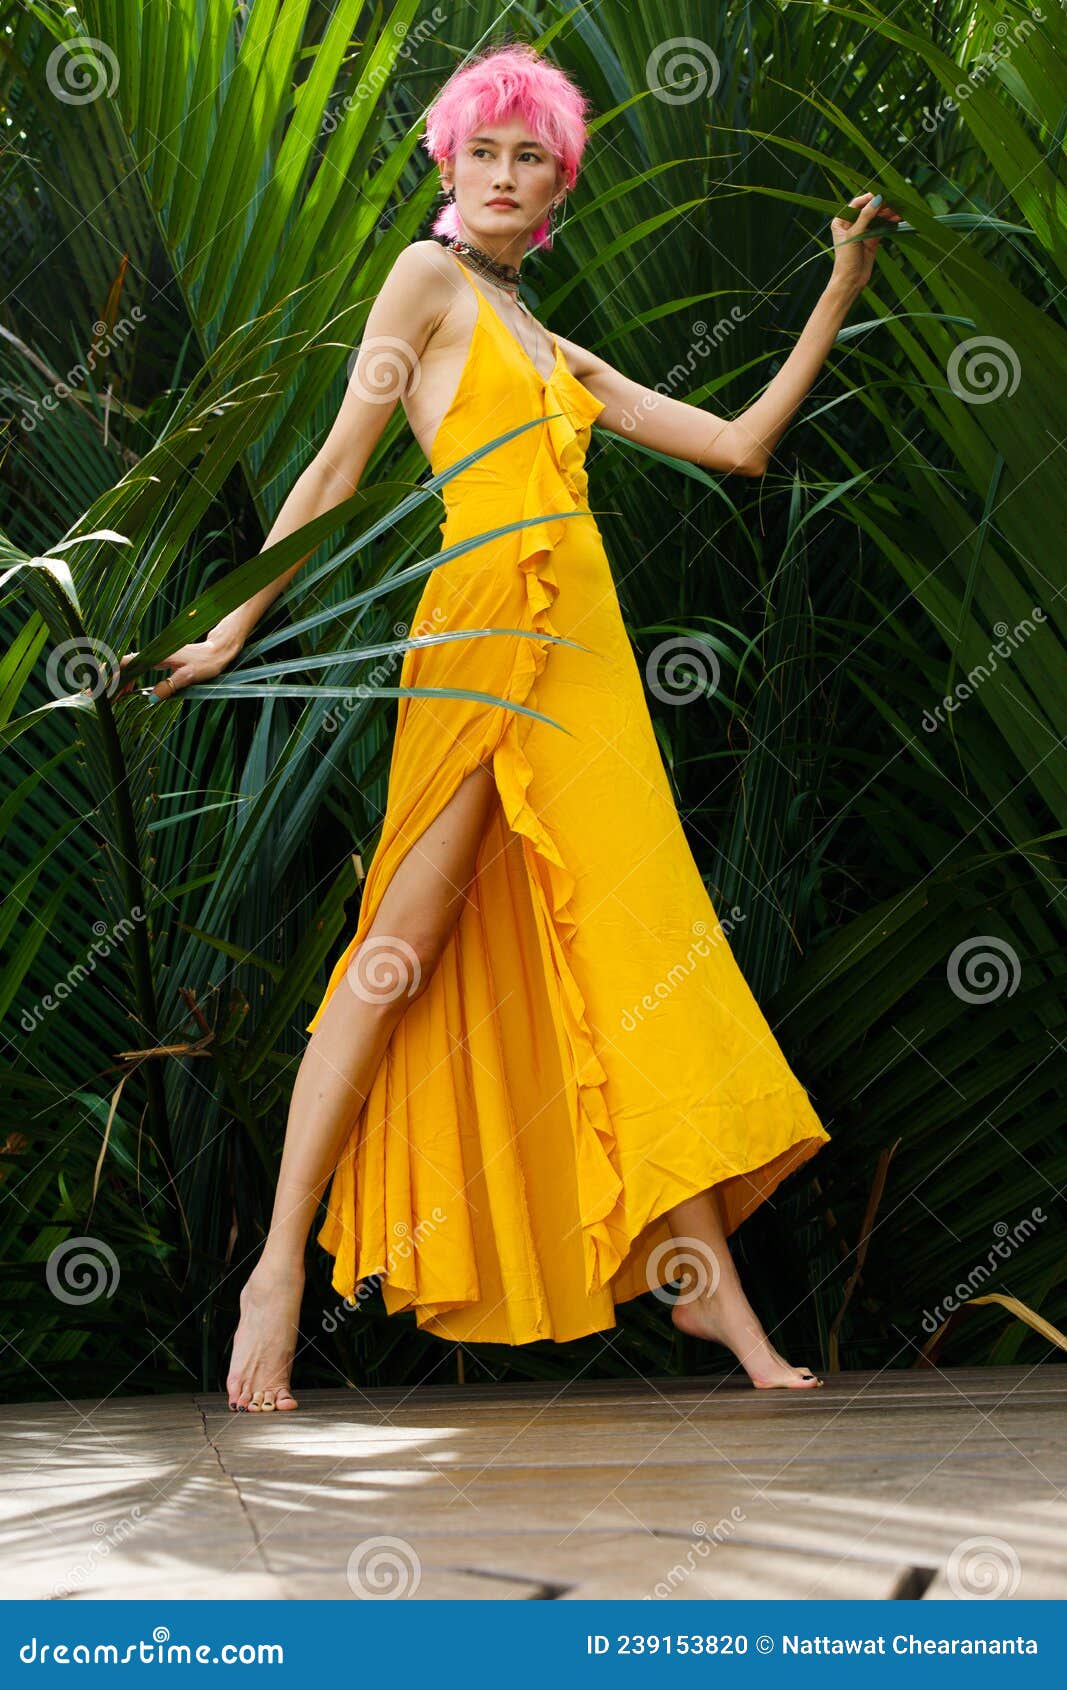 Желтое платье, платье желтого цвета. С чем носить желтое платье | Аделанта